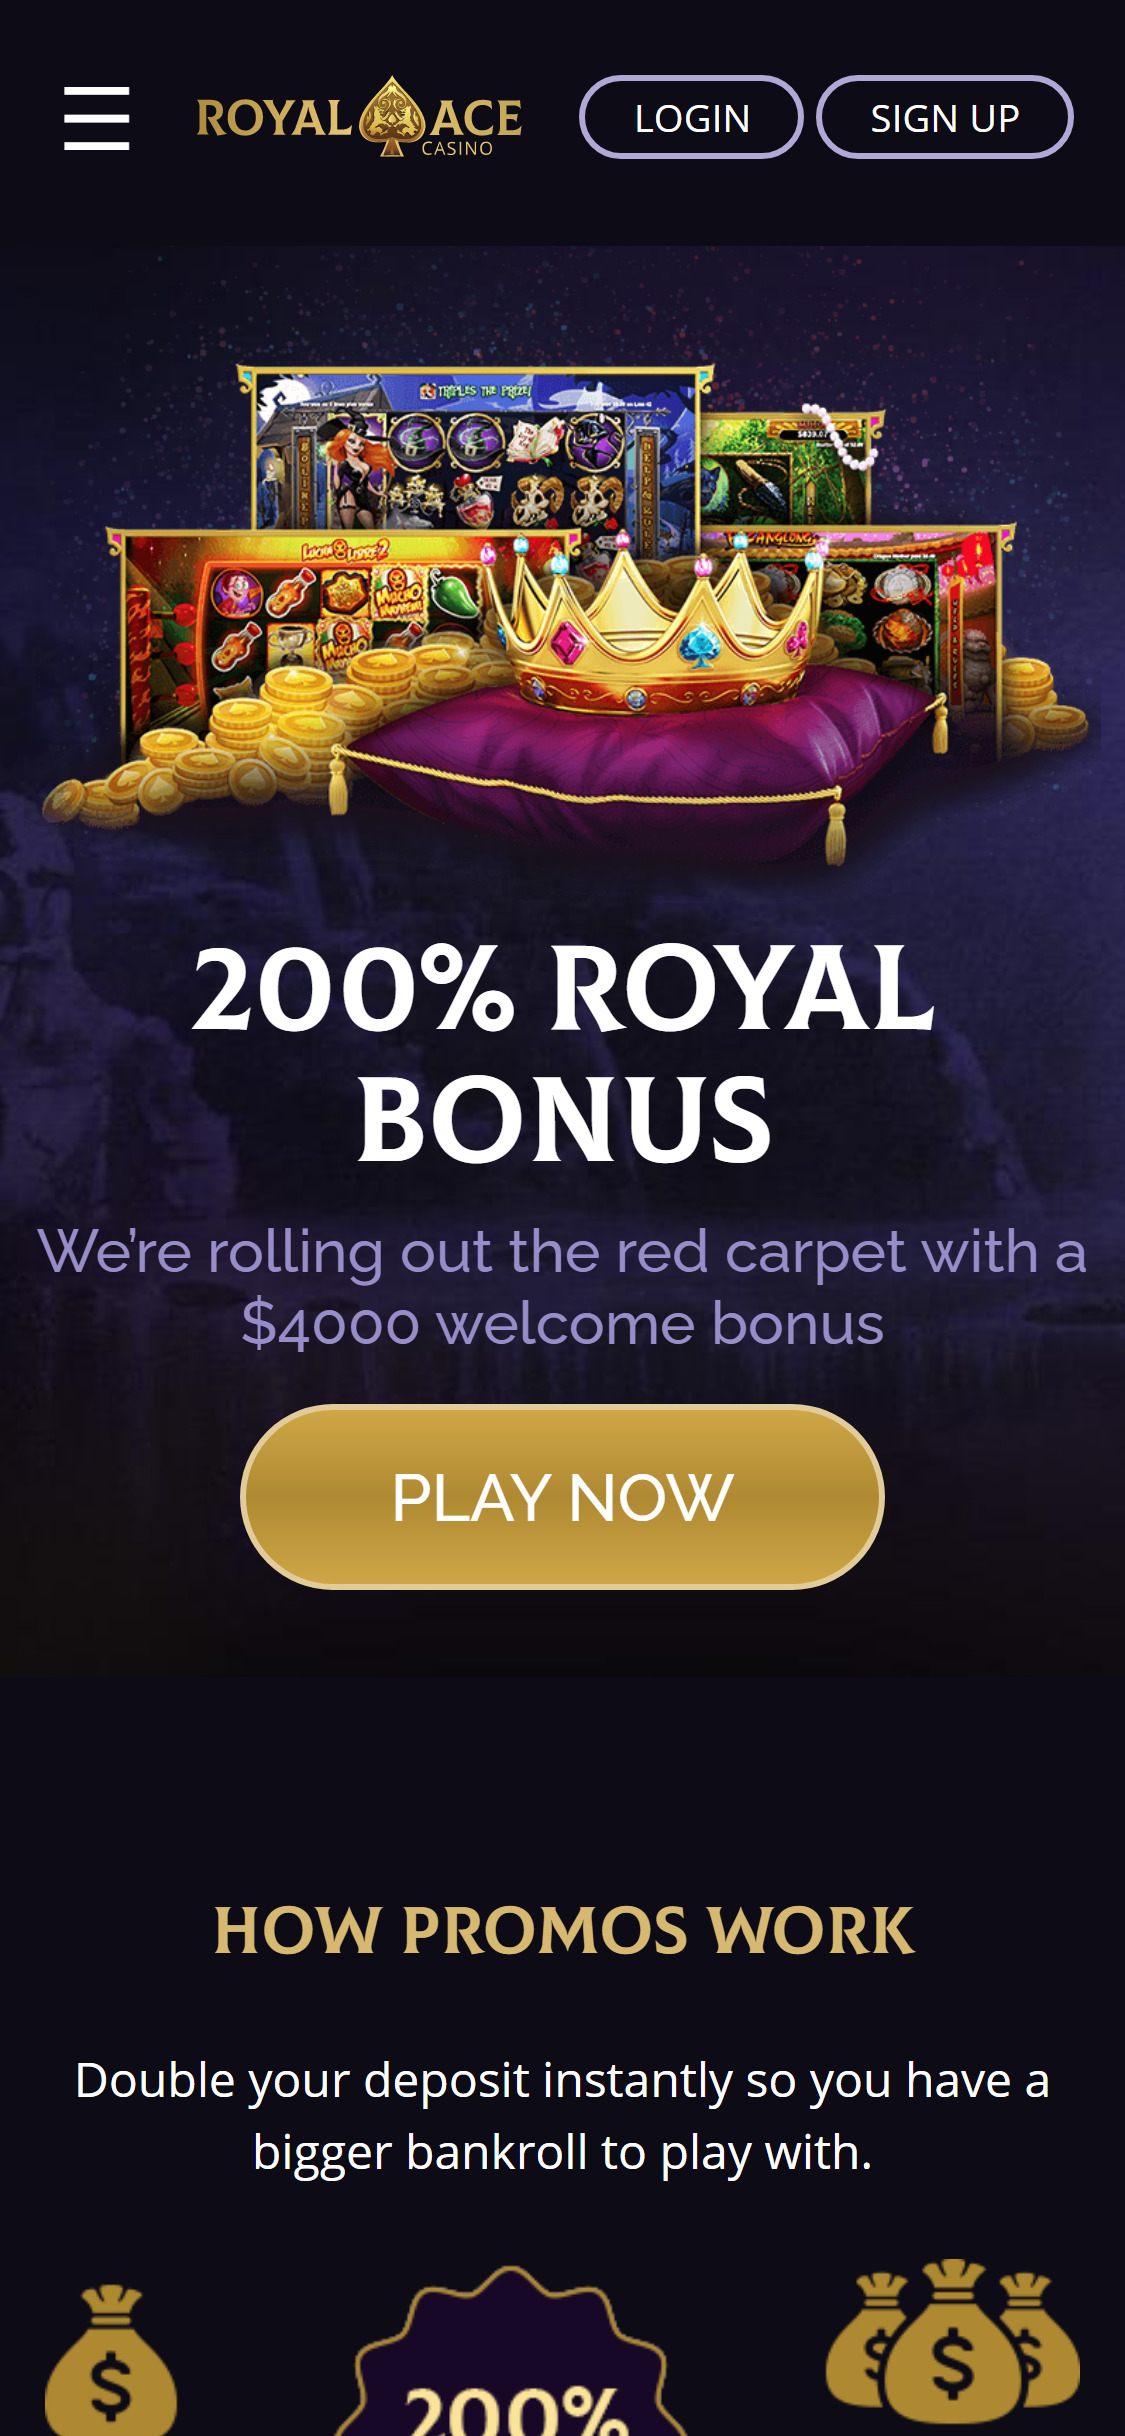 Royal Ace Casino Mobile No Deposit Bonus Review